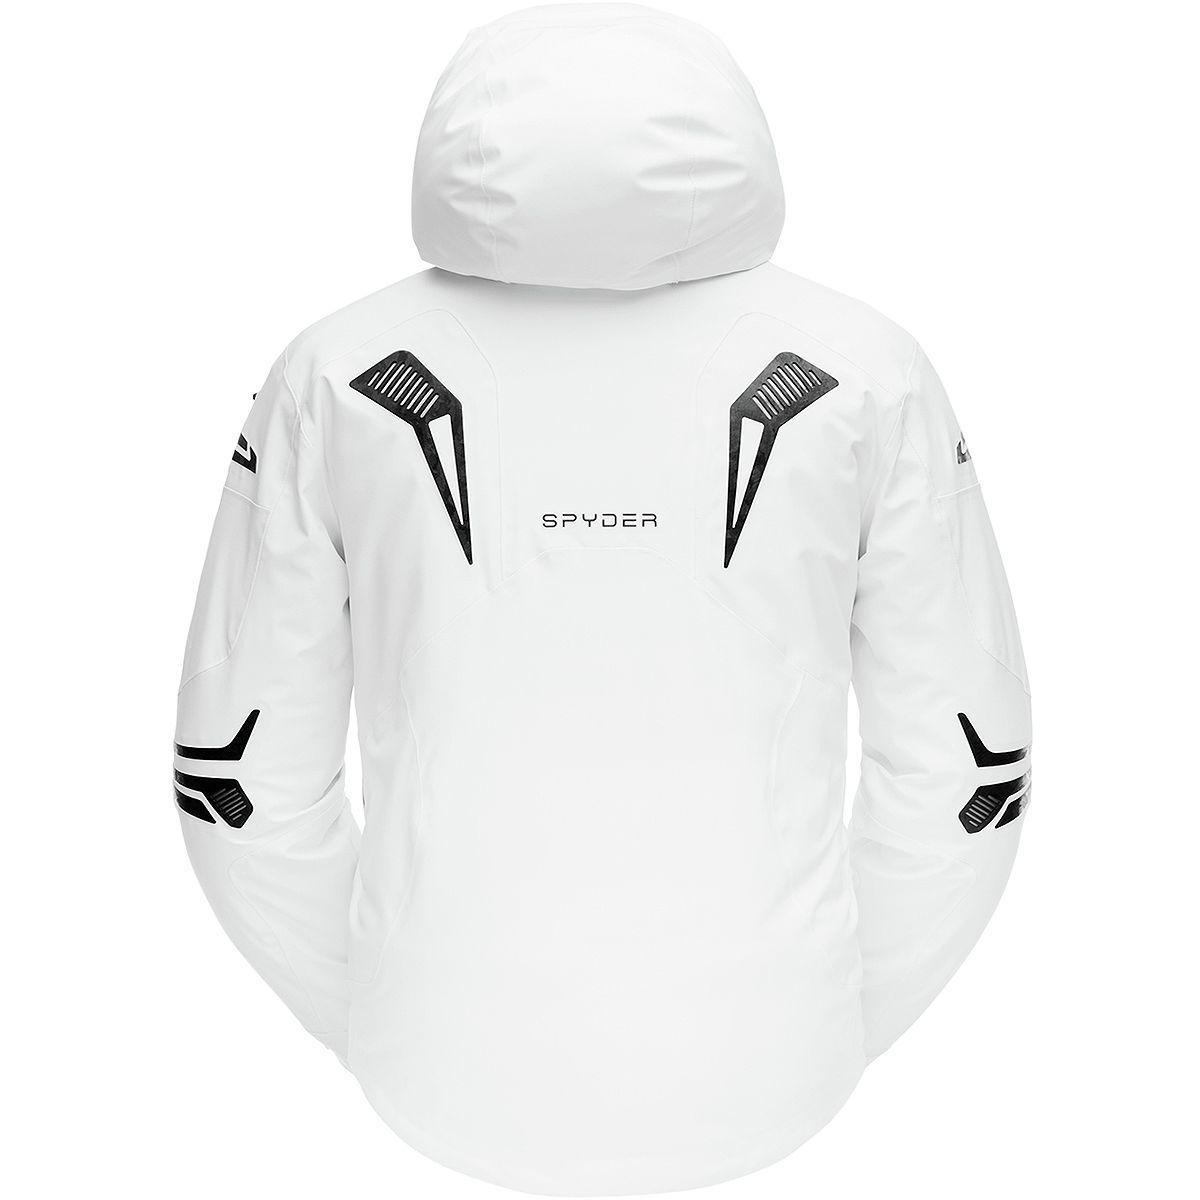 Spyder Pinnacle Gore-tex Jacket in White for Men - Lyst